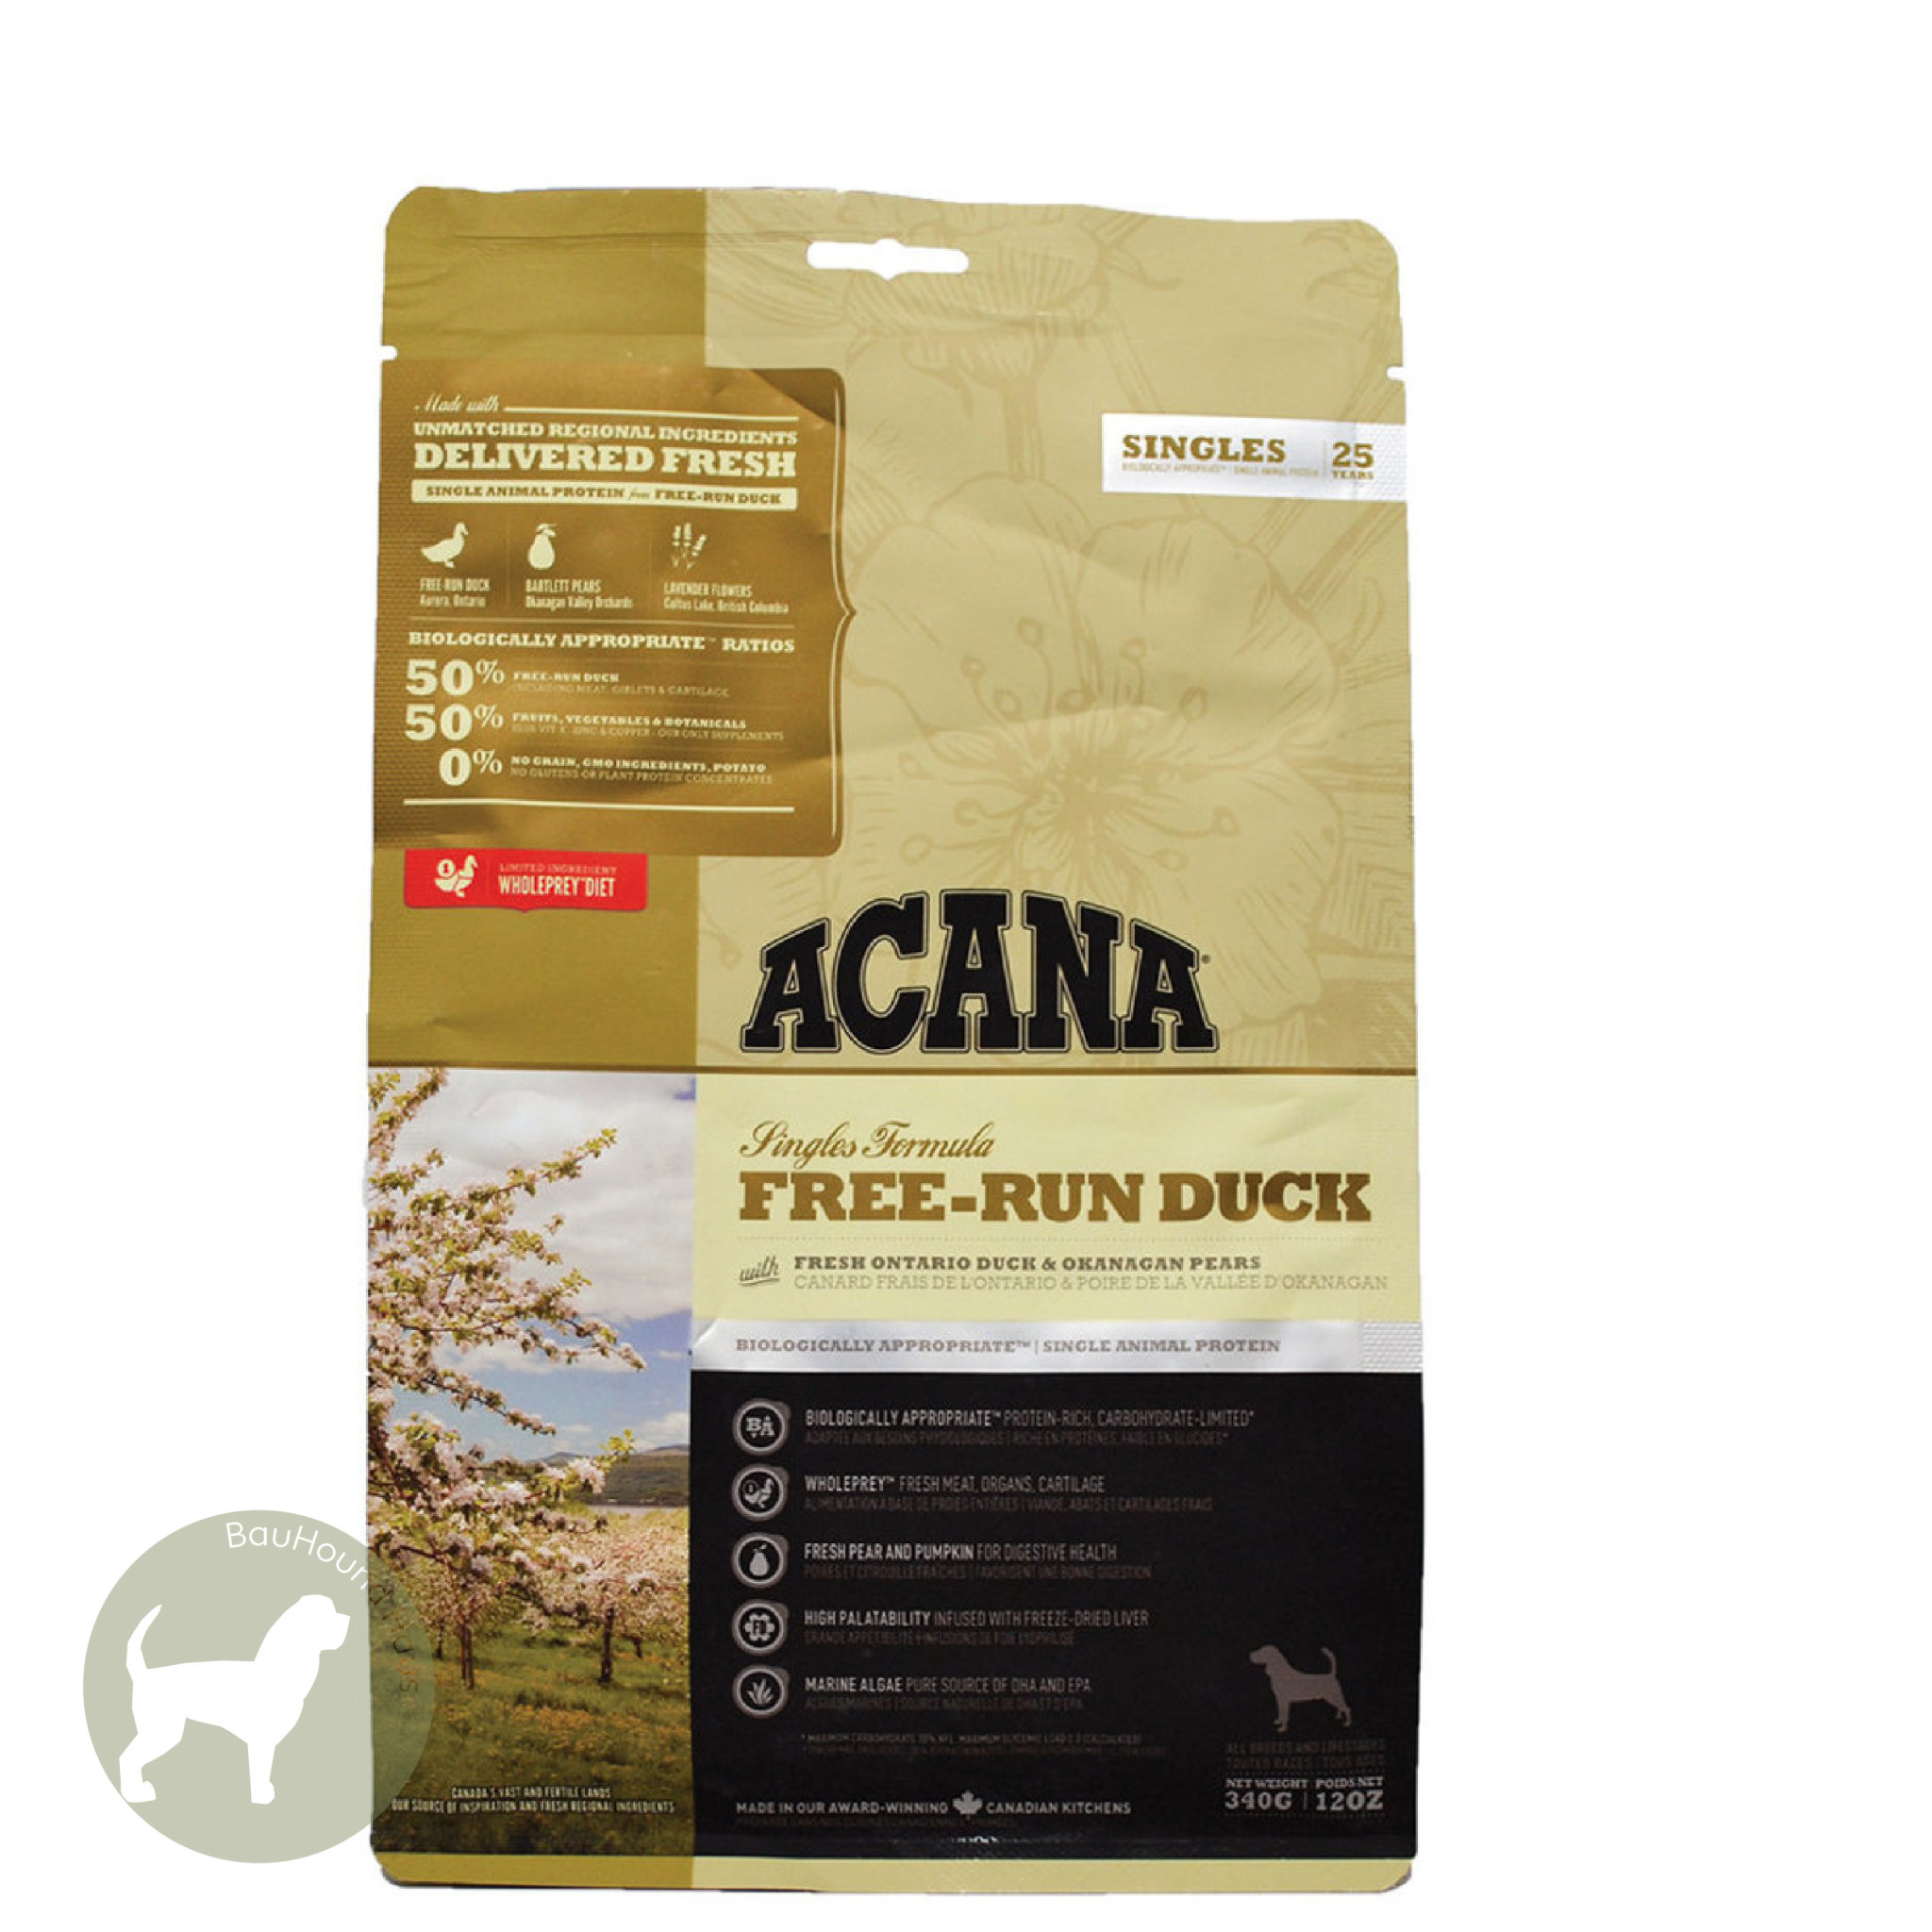 Acana Acana SINGLES Grain-Free  Duck & Pear Recipe Kibble, 1.8kg